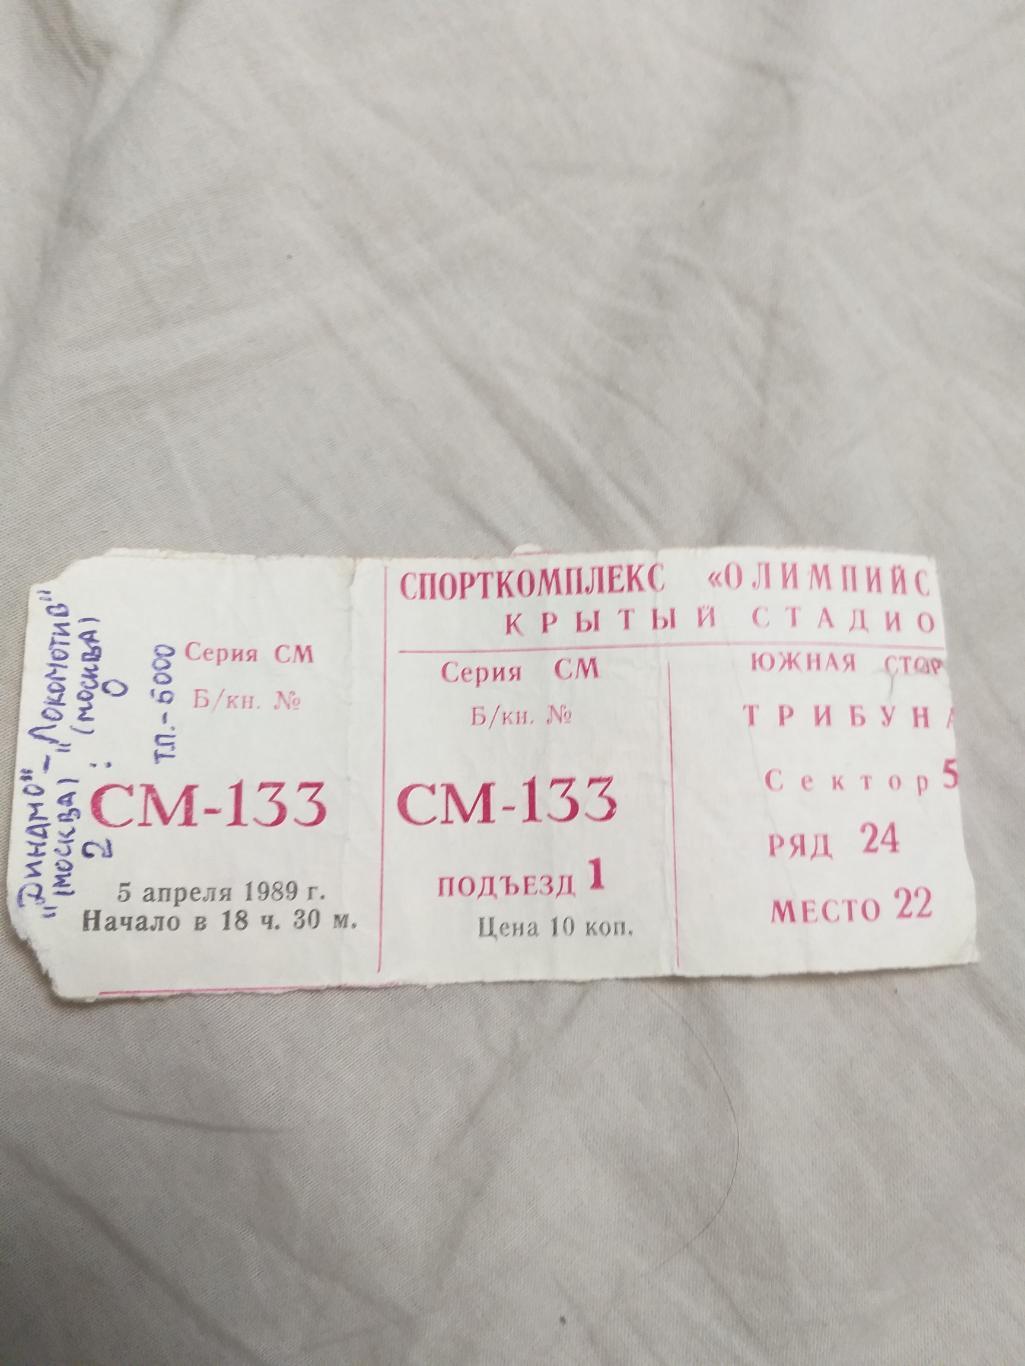 Динамо(Москва)-Локомотив(Мос ква) 5.04.1989 билет